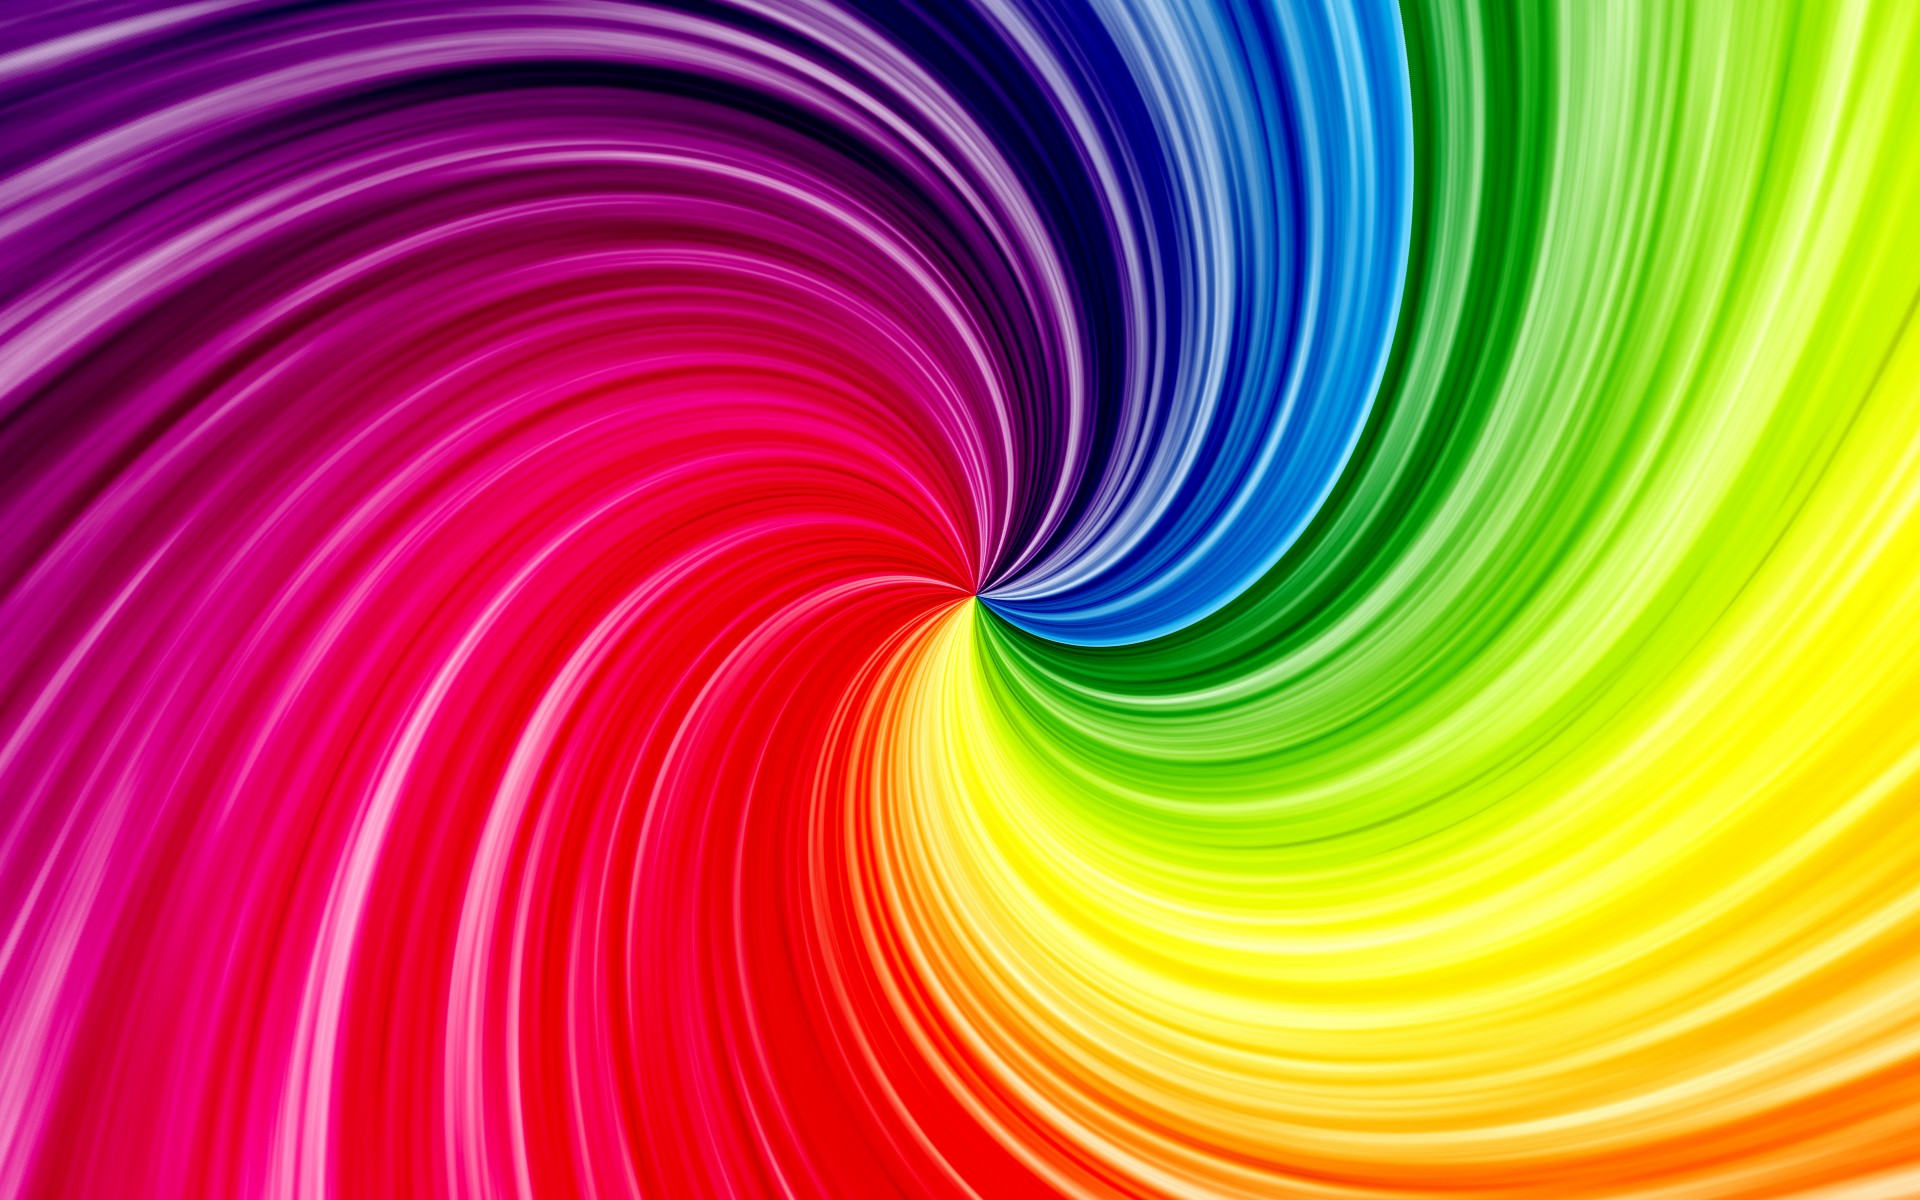  48 Rainbow Bright  Desktop Wallpaper  on WallpaperSafari